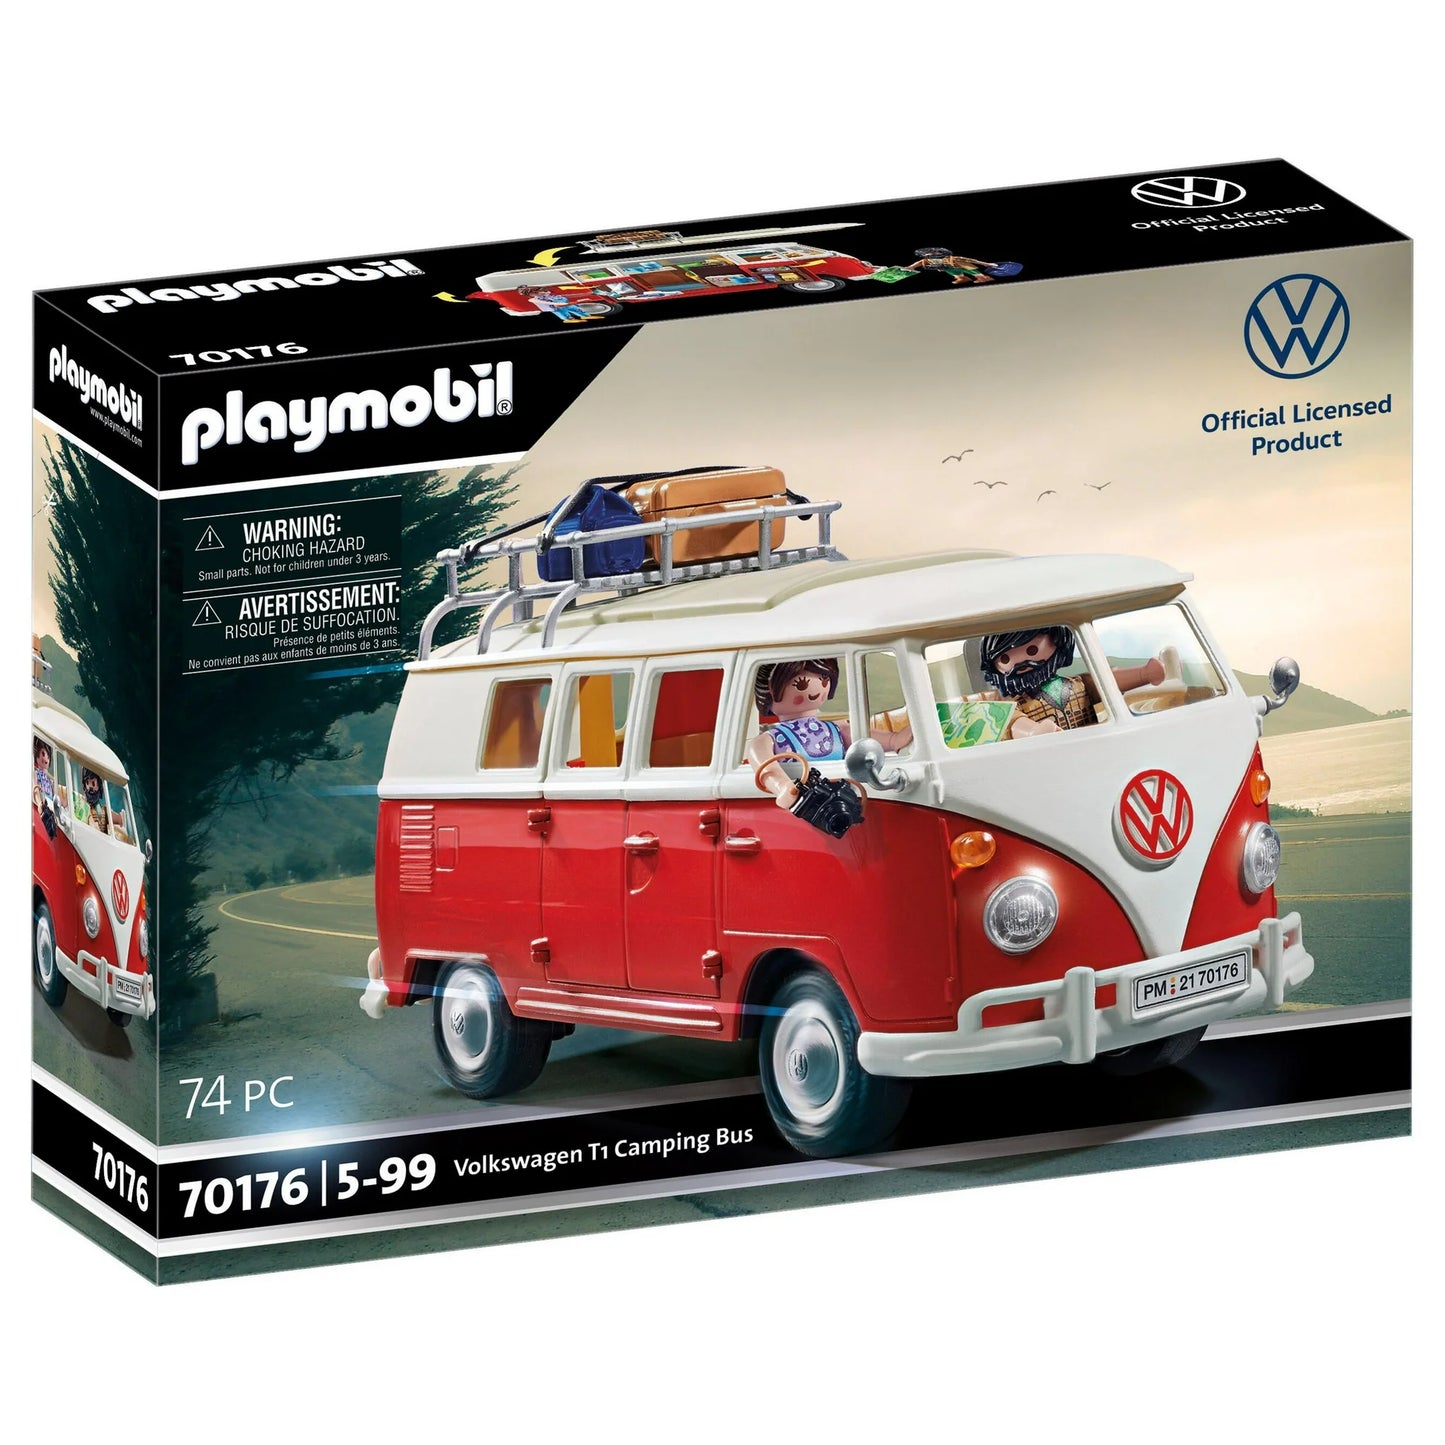 Playmobil - Volkswagen T1 Camping Bus - 74pcs - 70176